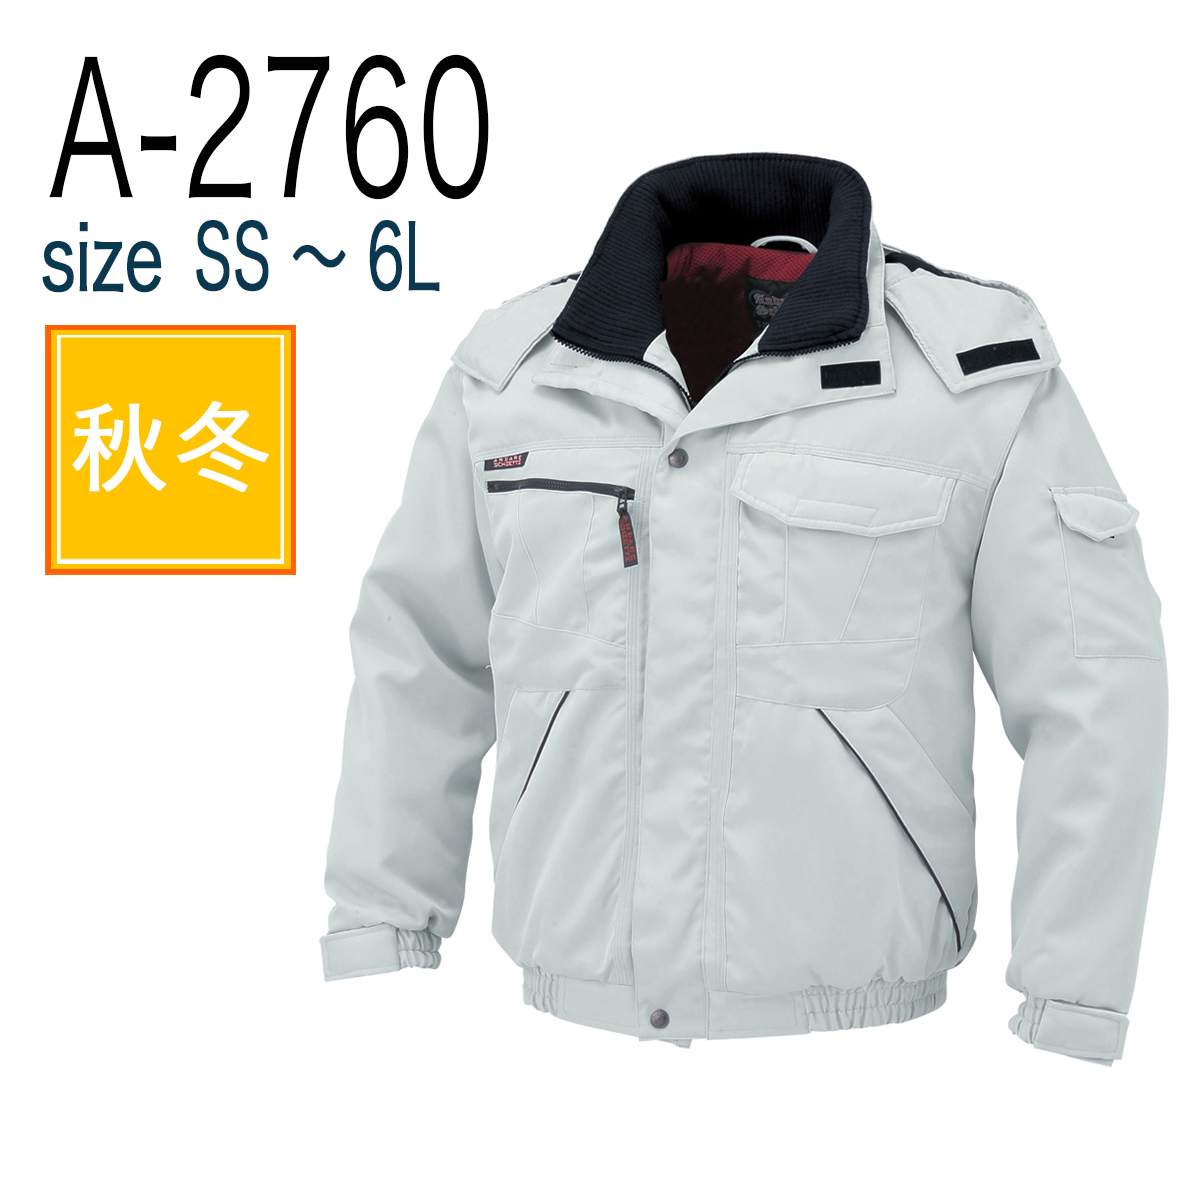 A-2766 防寒コート ブラックサファイア LL - 5